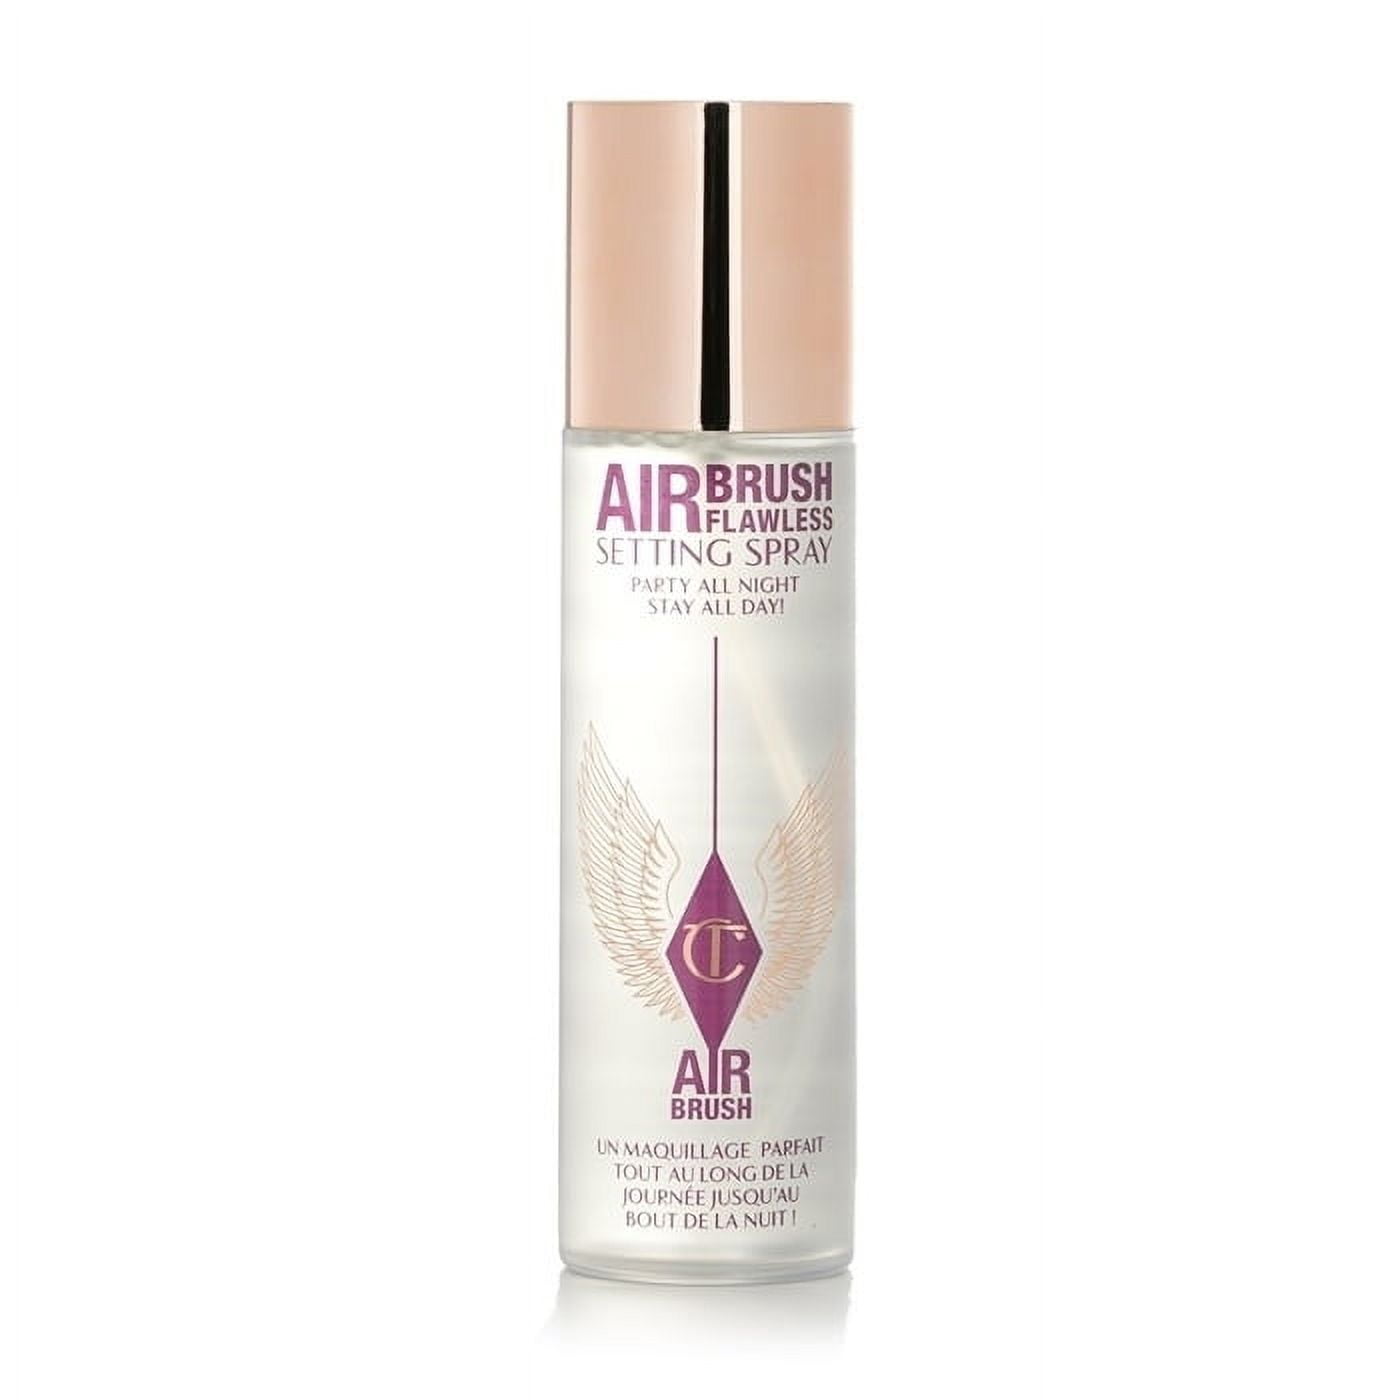 15ml Airbrush Flawless Setting Spray - AliExpress